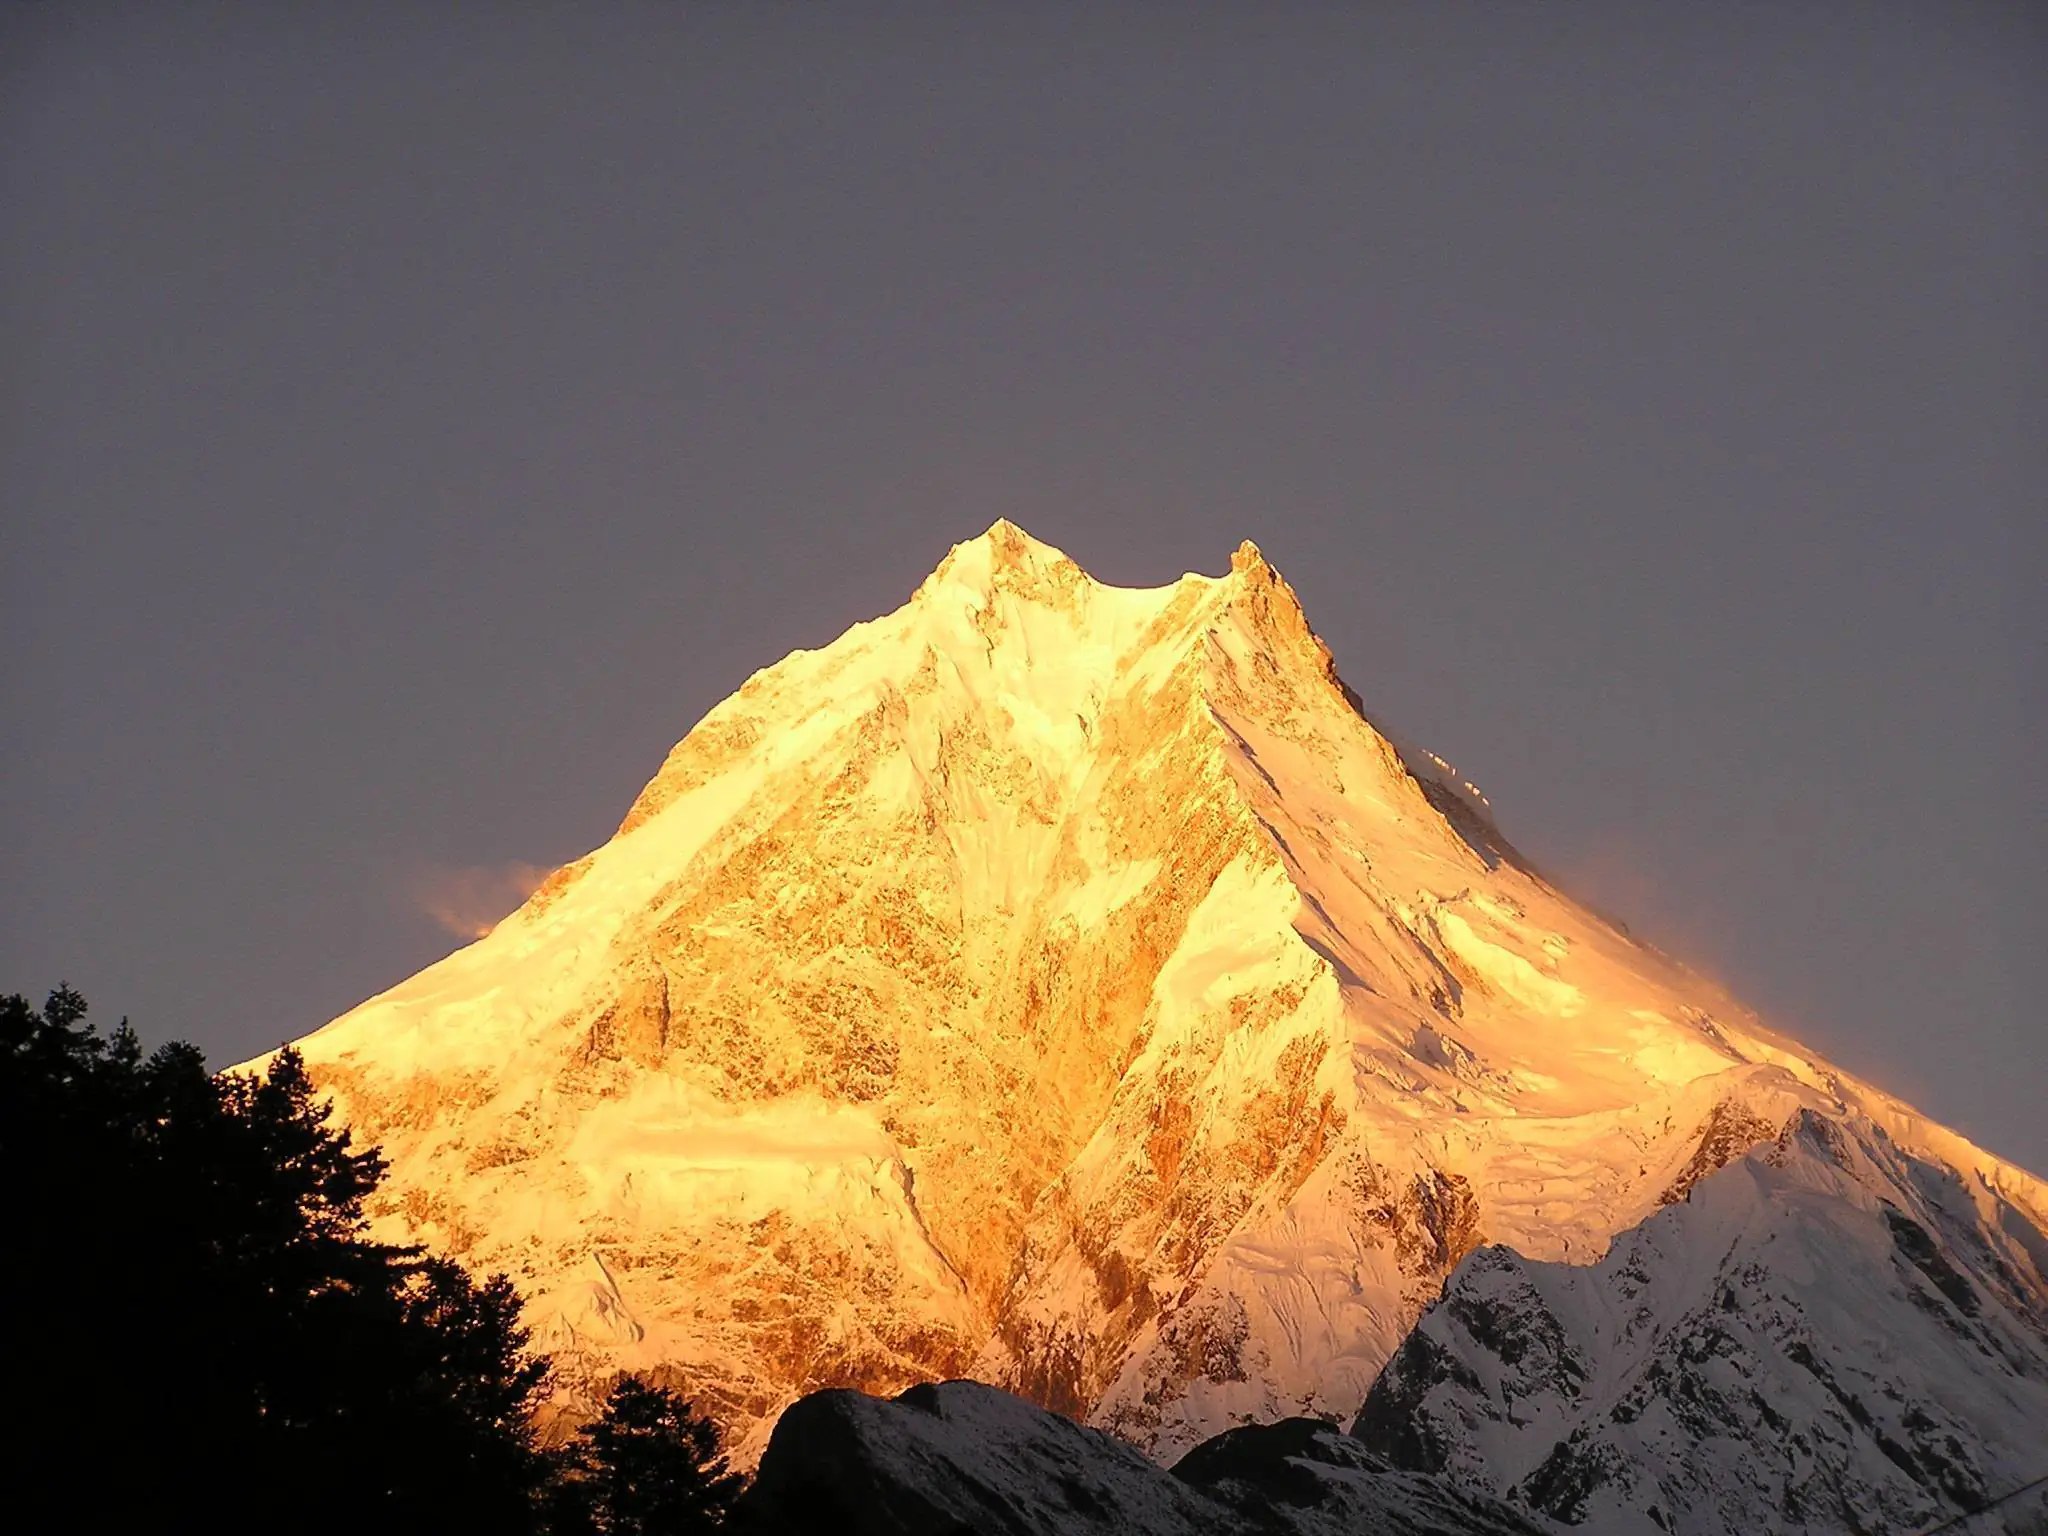 Himalayan Trekking and Tours (P) Ltd | Annapurna Base Camp Trek vs. Everest Base Camp Trek: A Comparison